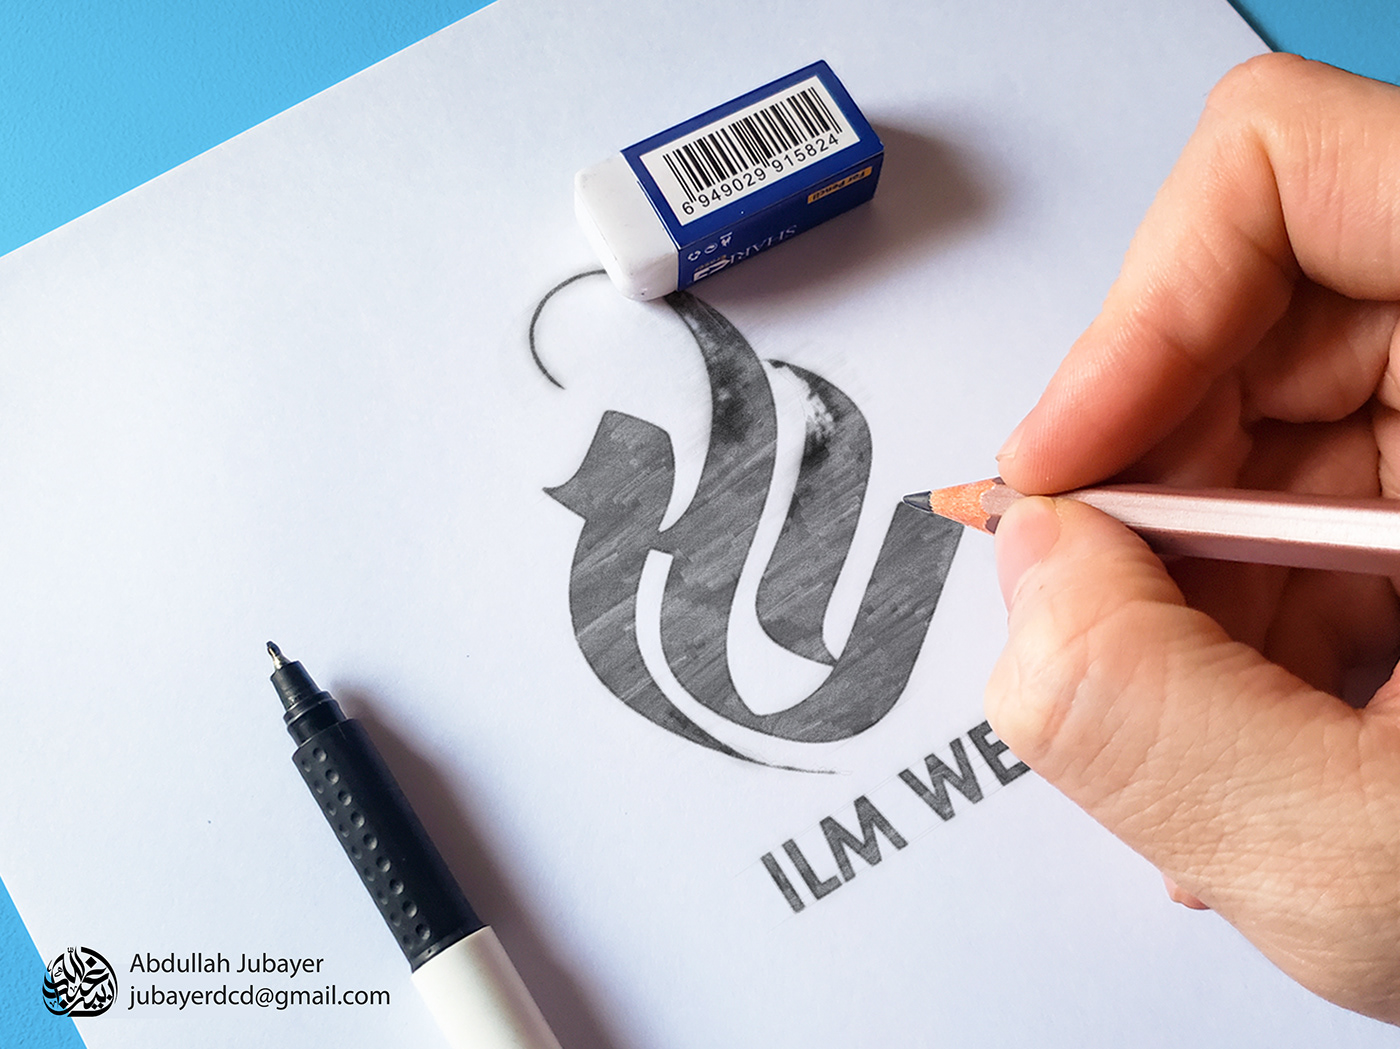 ILM (علم) Modern Arabic Calligraphy Logo | 
علم تصميم شعار الخط العربي